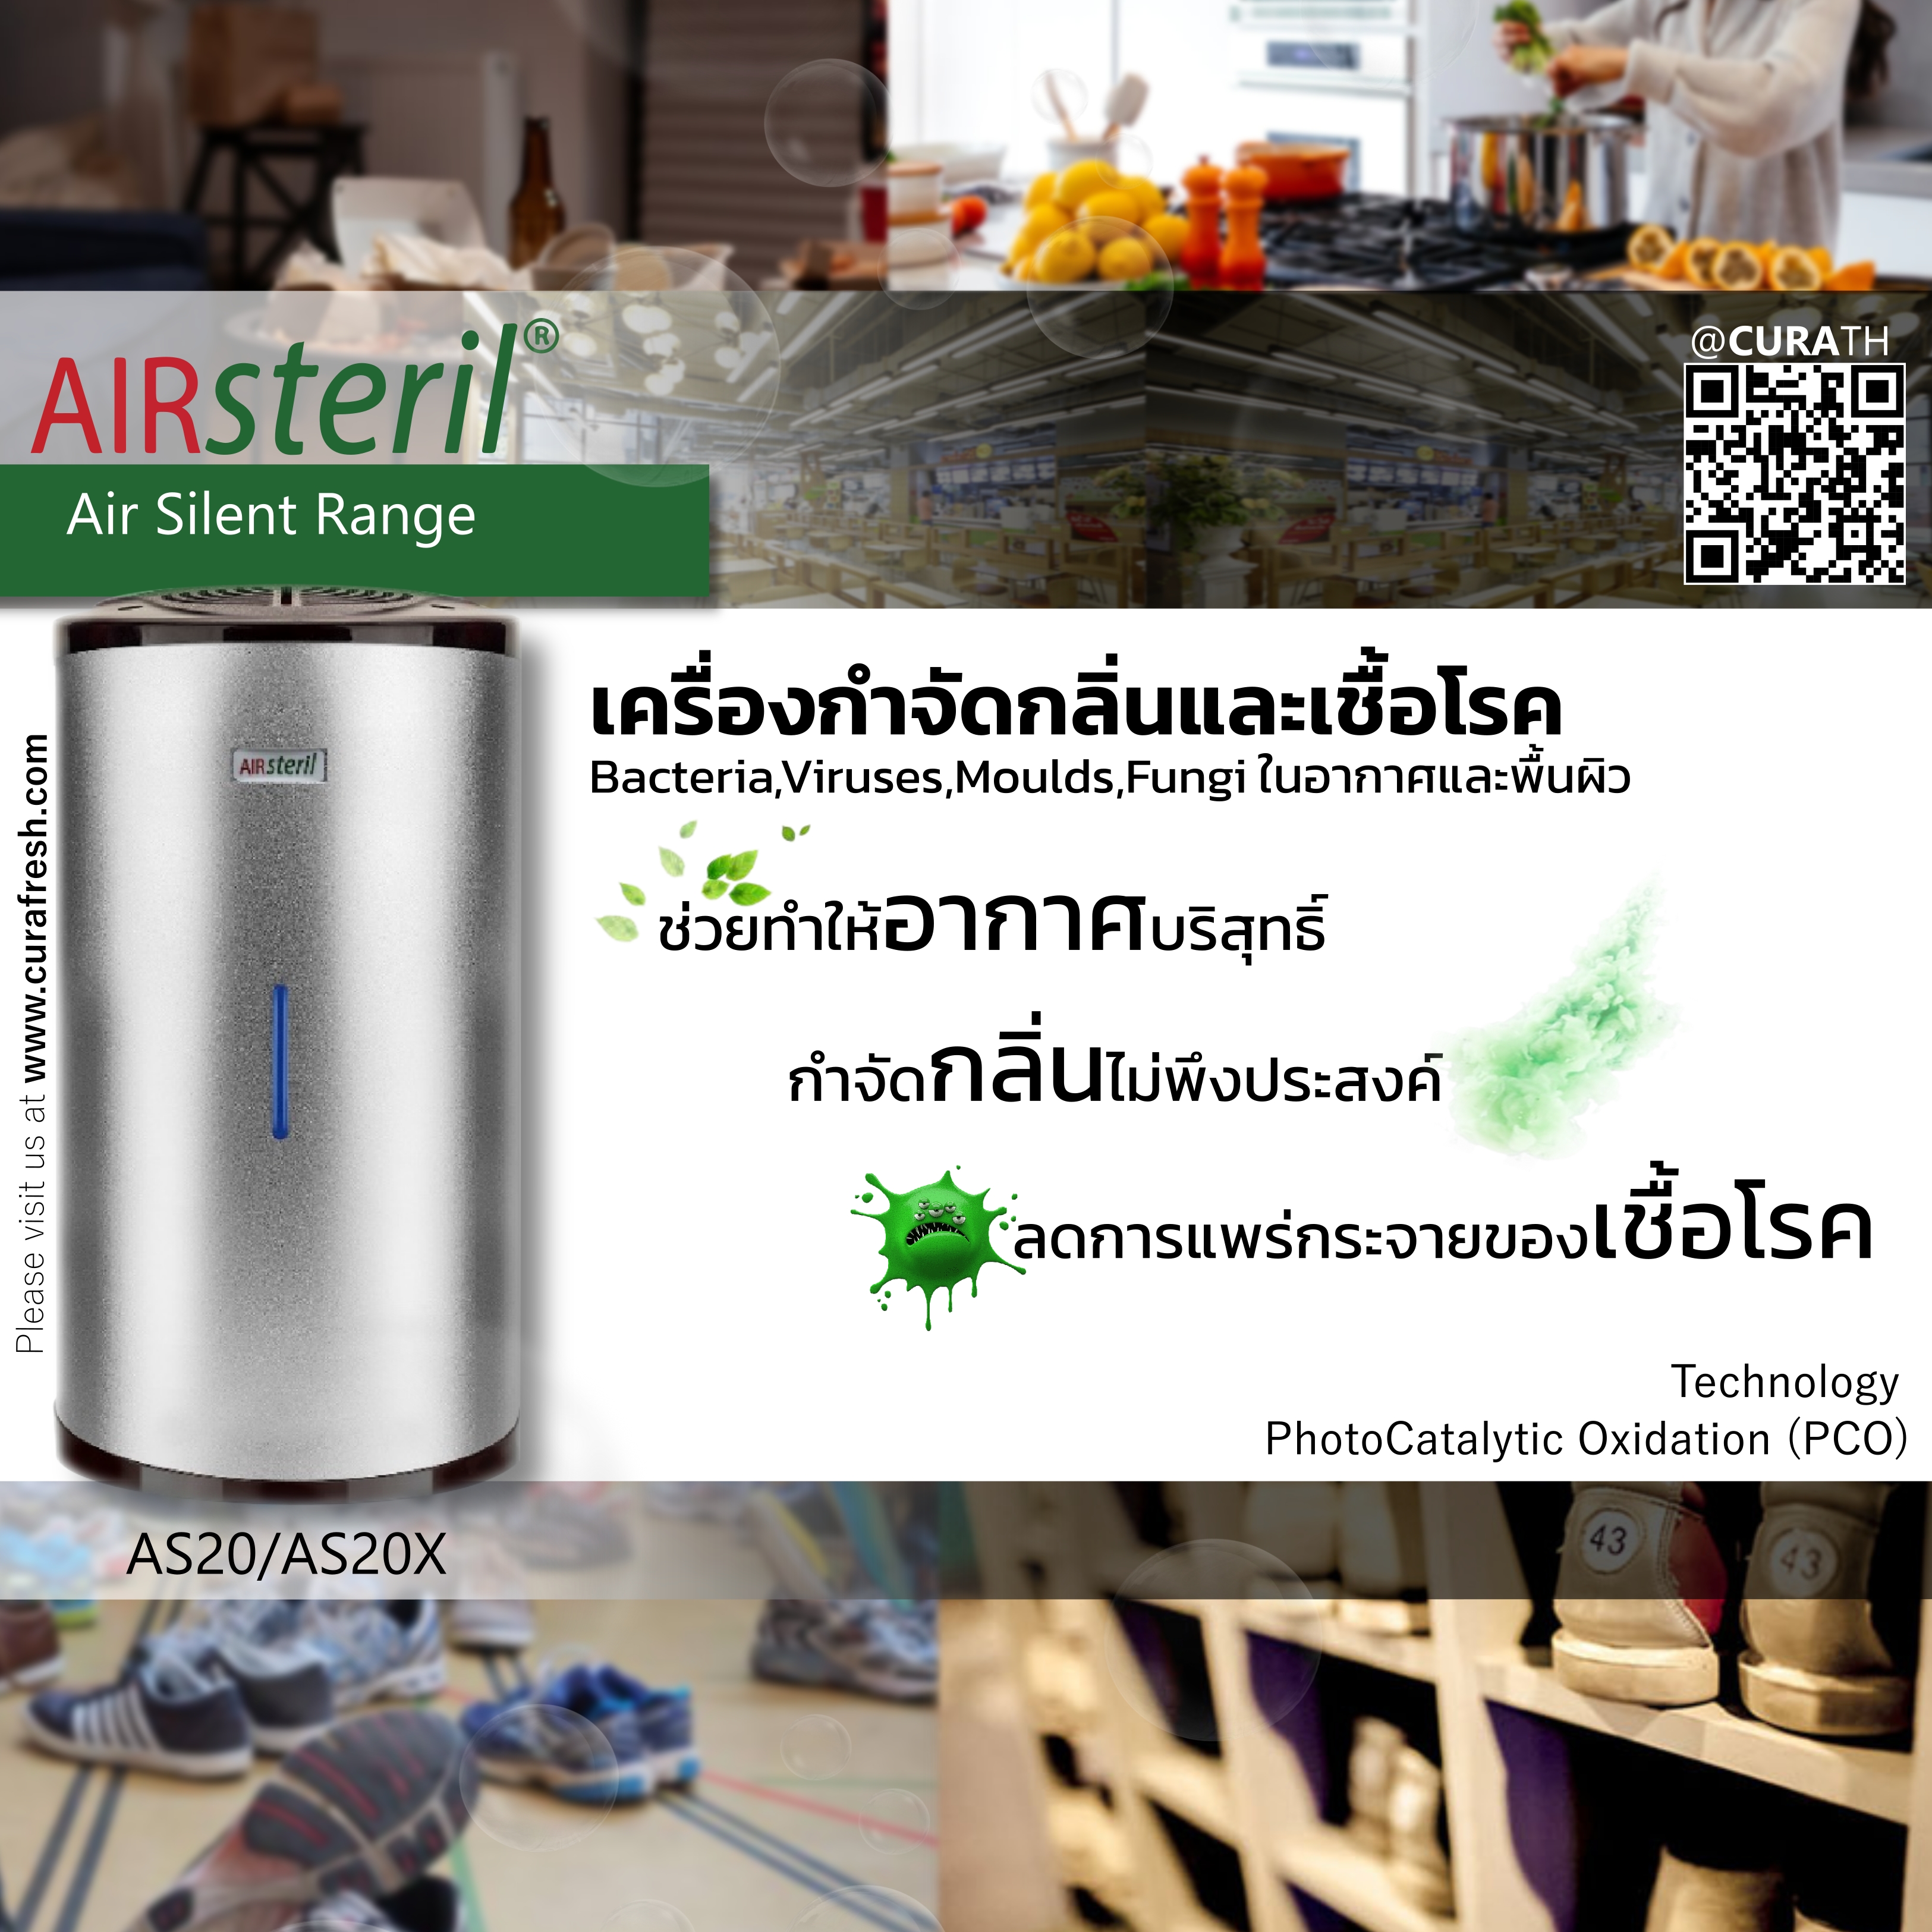 Promotion Air Steril AS20 AS20X เครื่องฟอกอากาศ กำจัดกลิ่นและเชื้อโรค ช่วยให้อากาศบริสุทธิ กำจัดกลิ่นไม่พึงประสงค์ ลดการแพร่กระจายของเชื้อ ด้วย Technology PCO (PhotoCatalytic Oxidation)